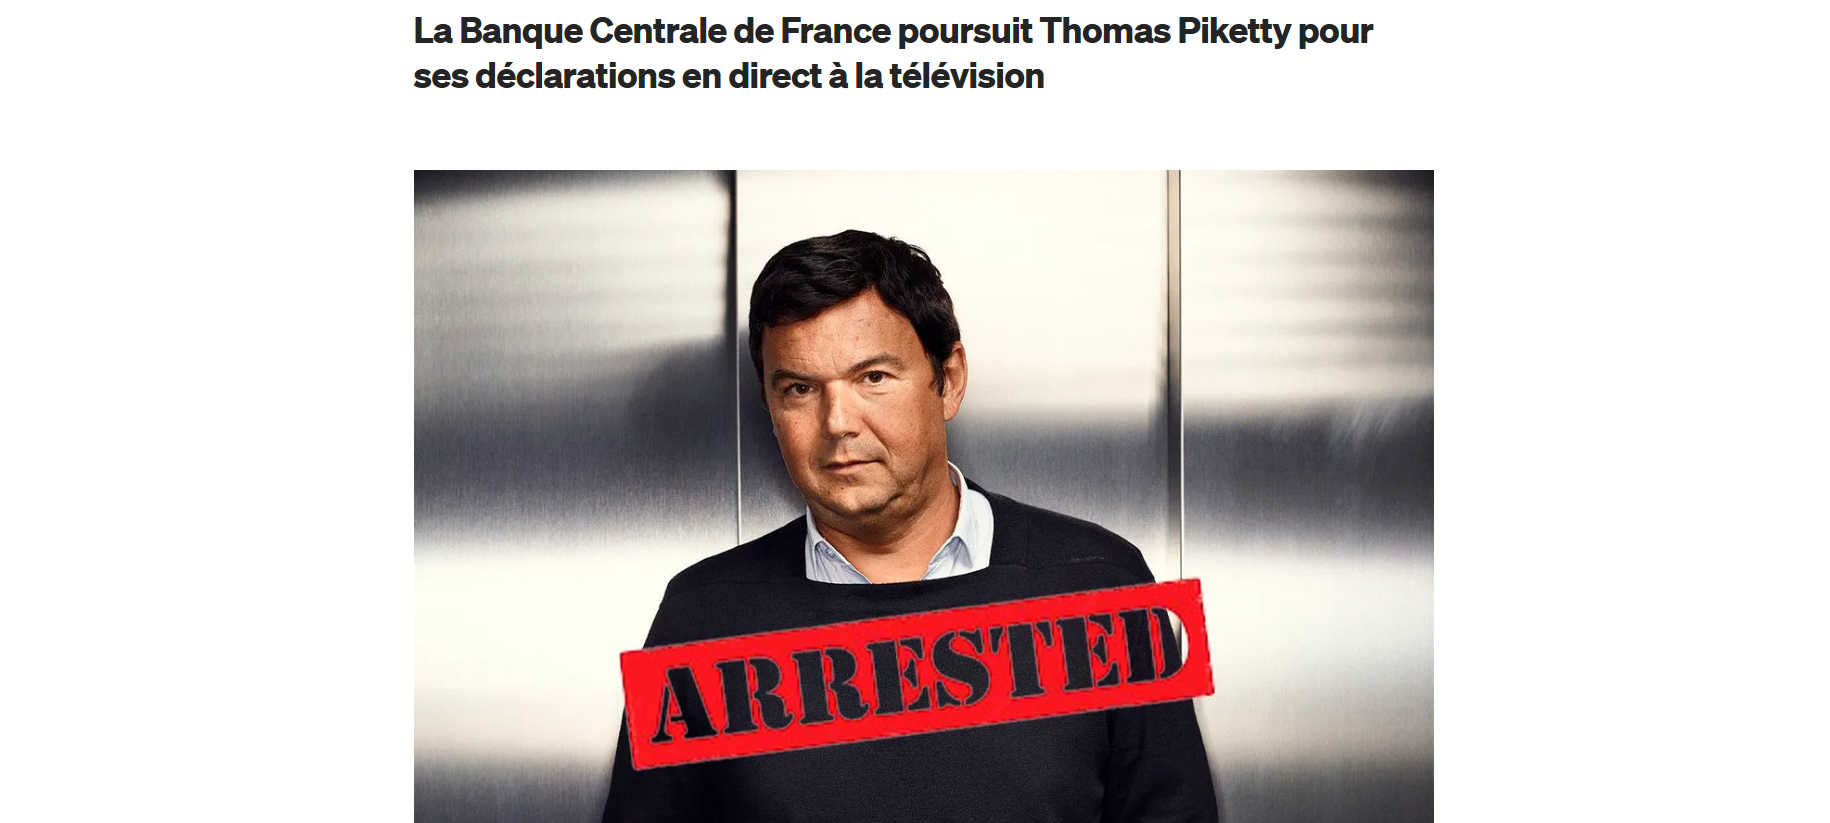 Thomas Piketty involontairement associé à l'arnaque Immediate 700 NeuPro